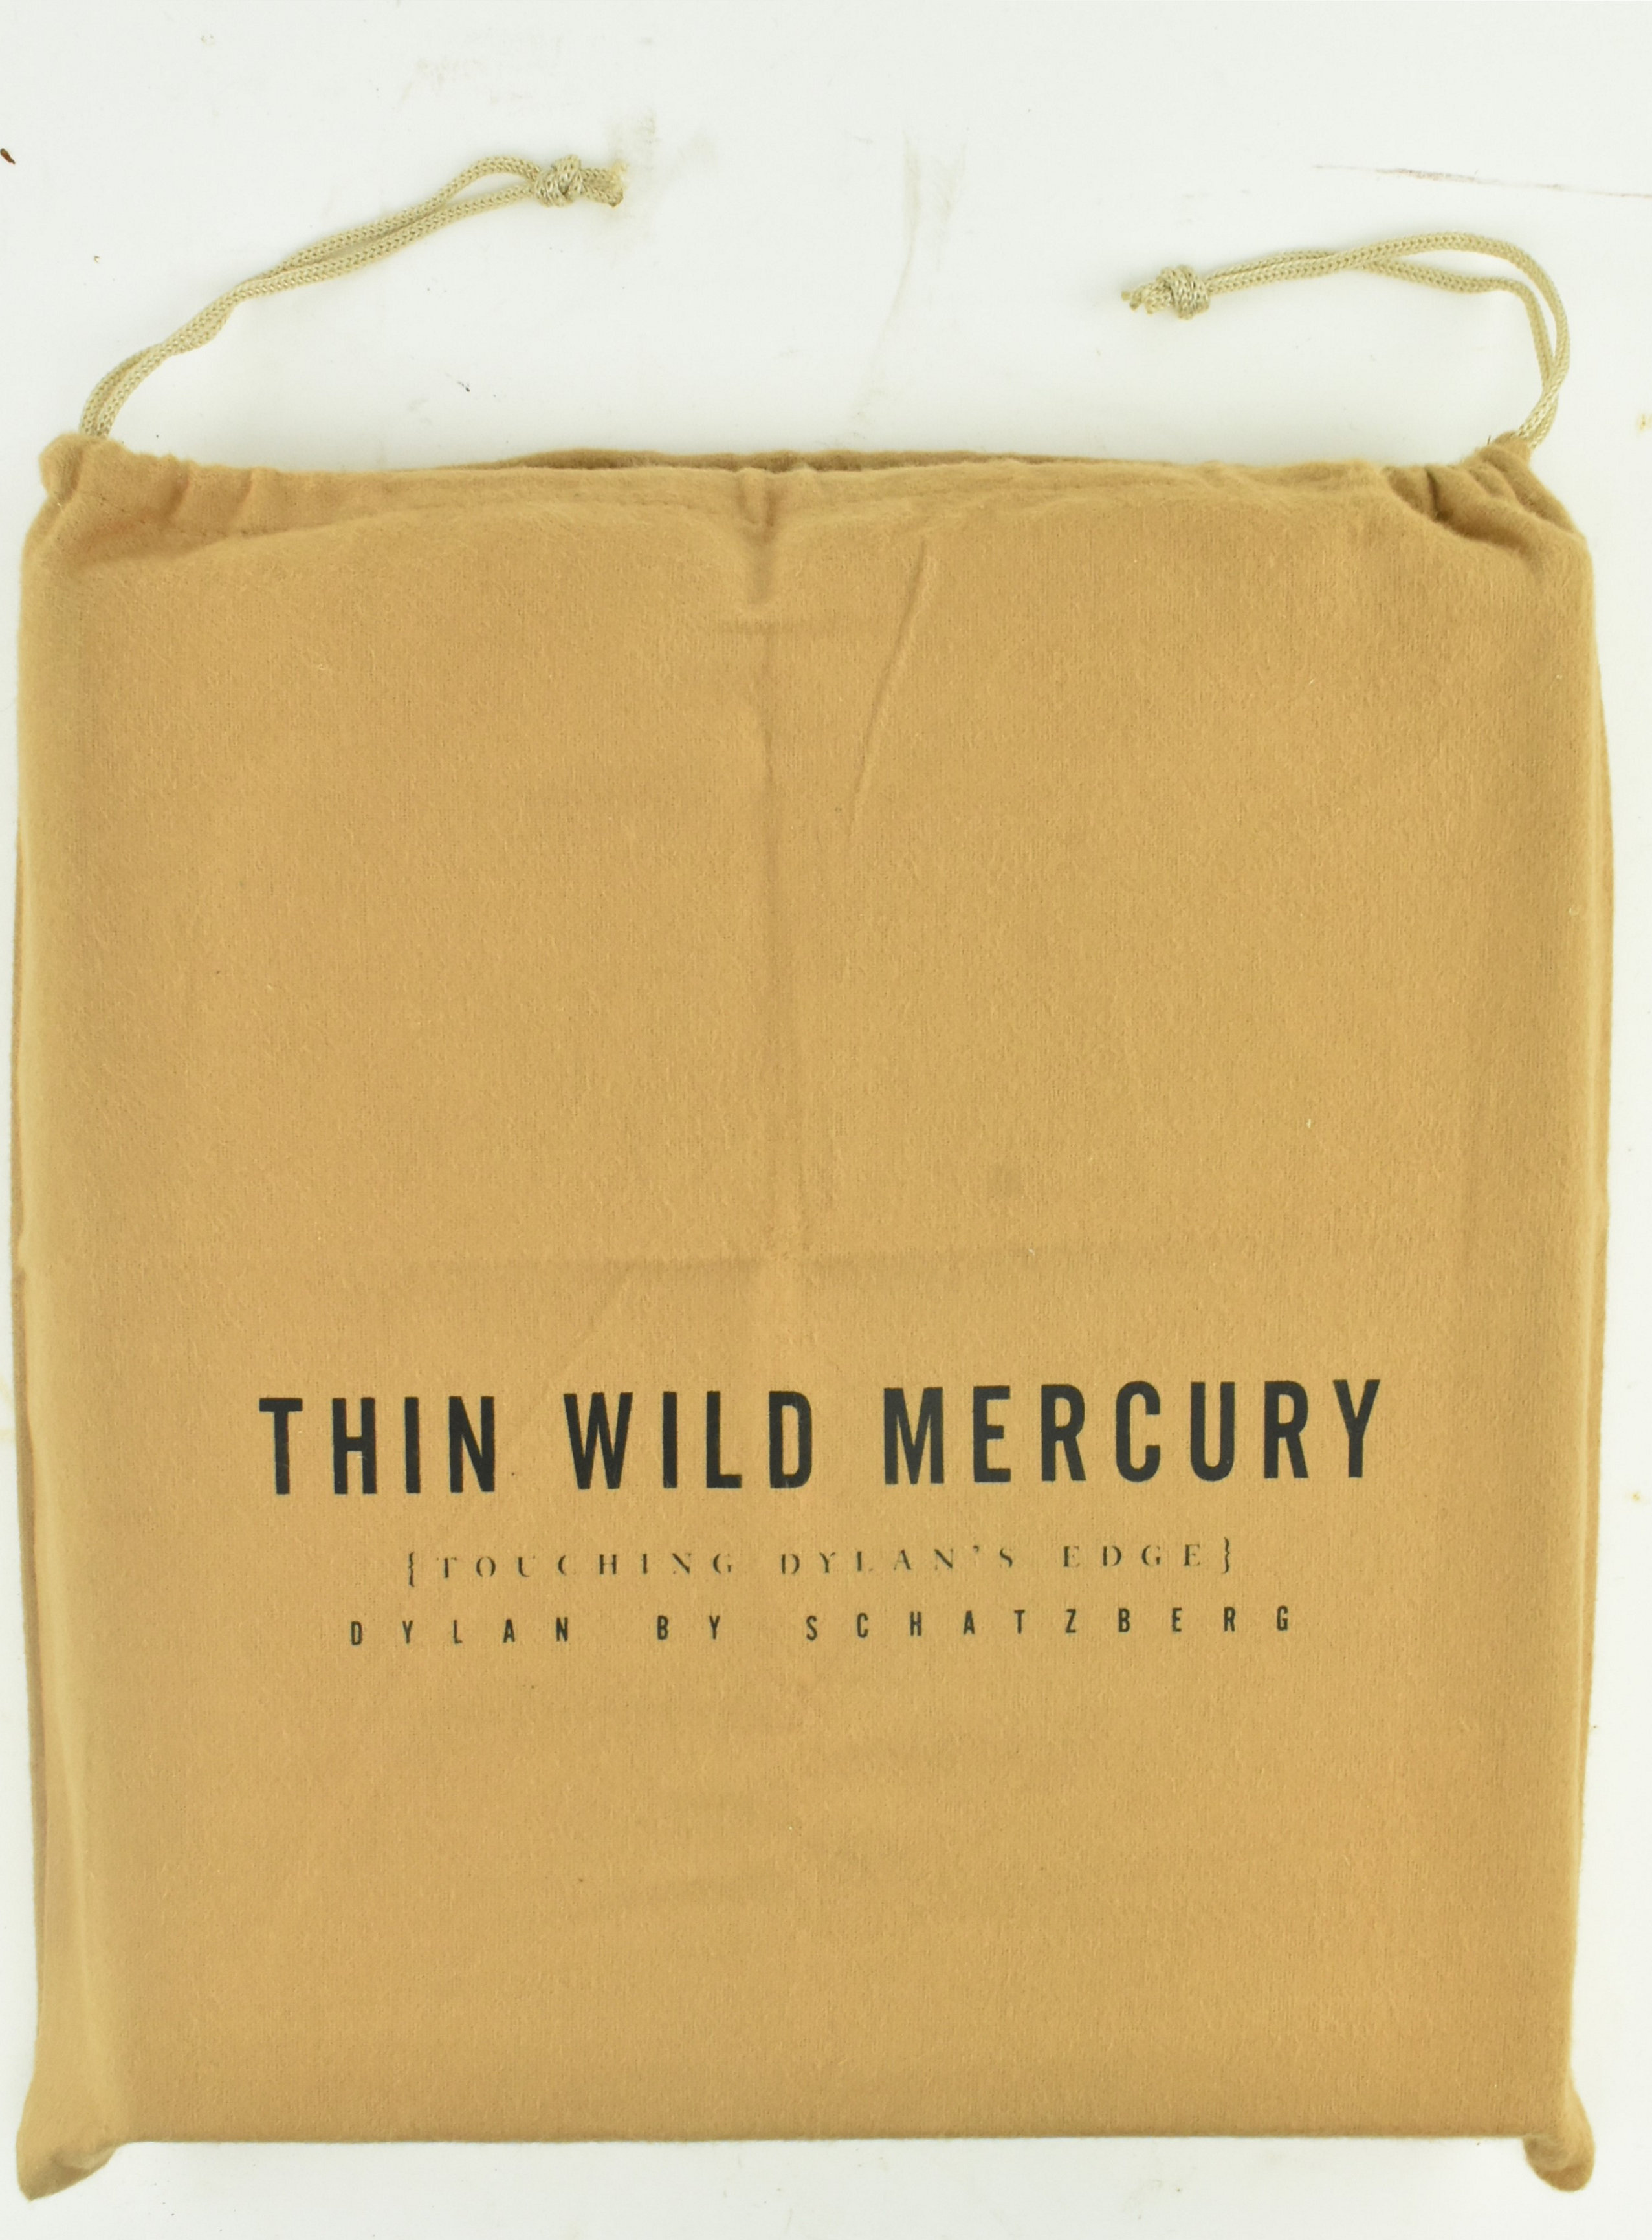 THIN WILD MERCURY. JERRY SCHATZBERG SIGNED LIMITED EDITION - Image 2 of 14